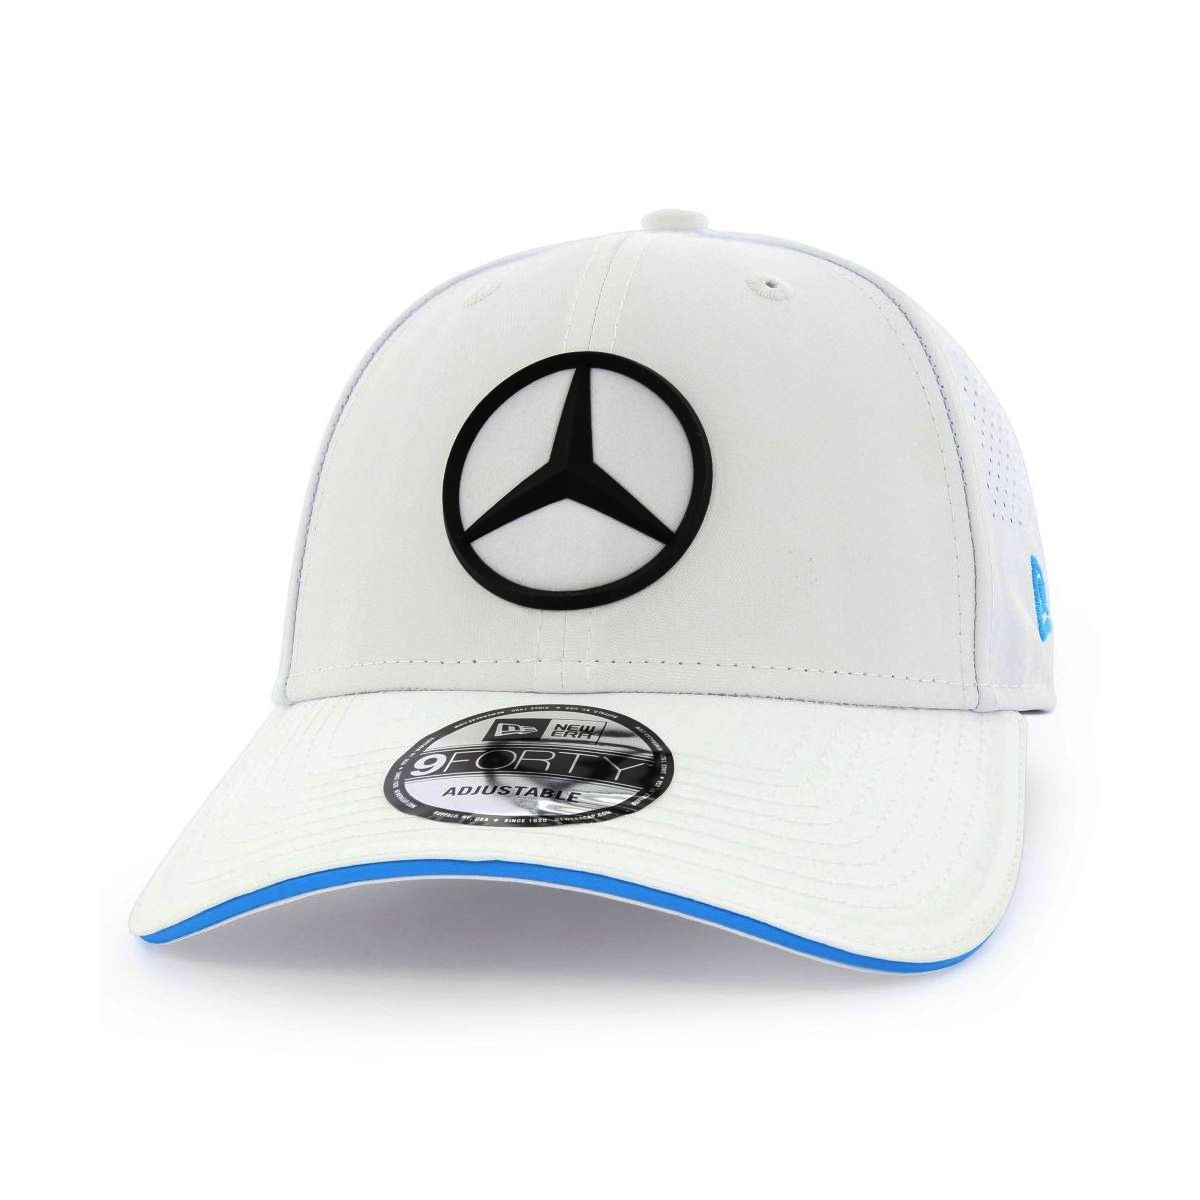 New Era Mercedes Formula E Replica Perf Men's Cap White